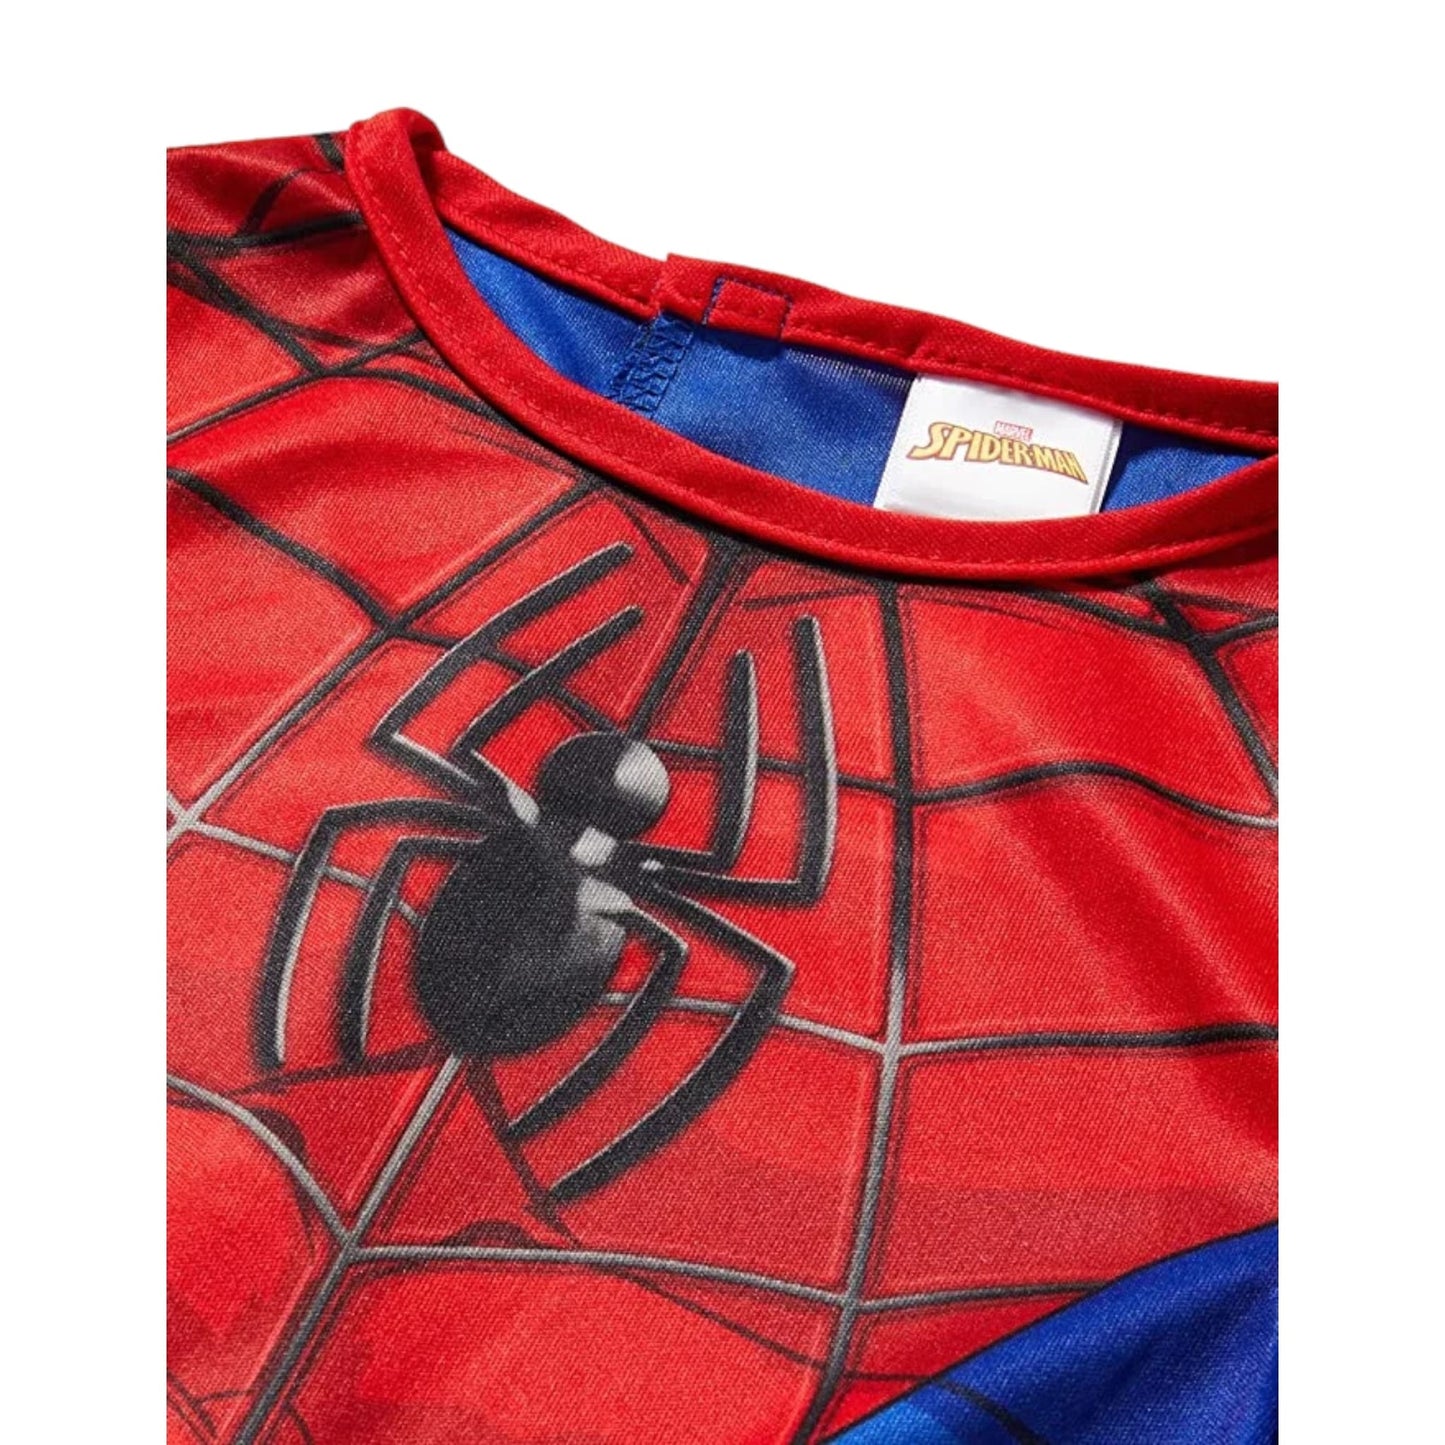 Spiderman-Kostüm 